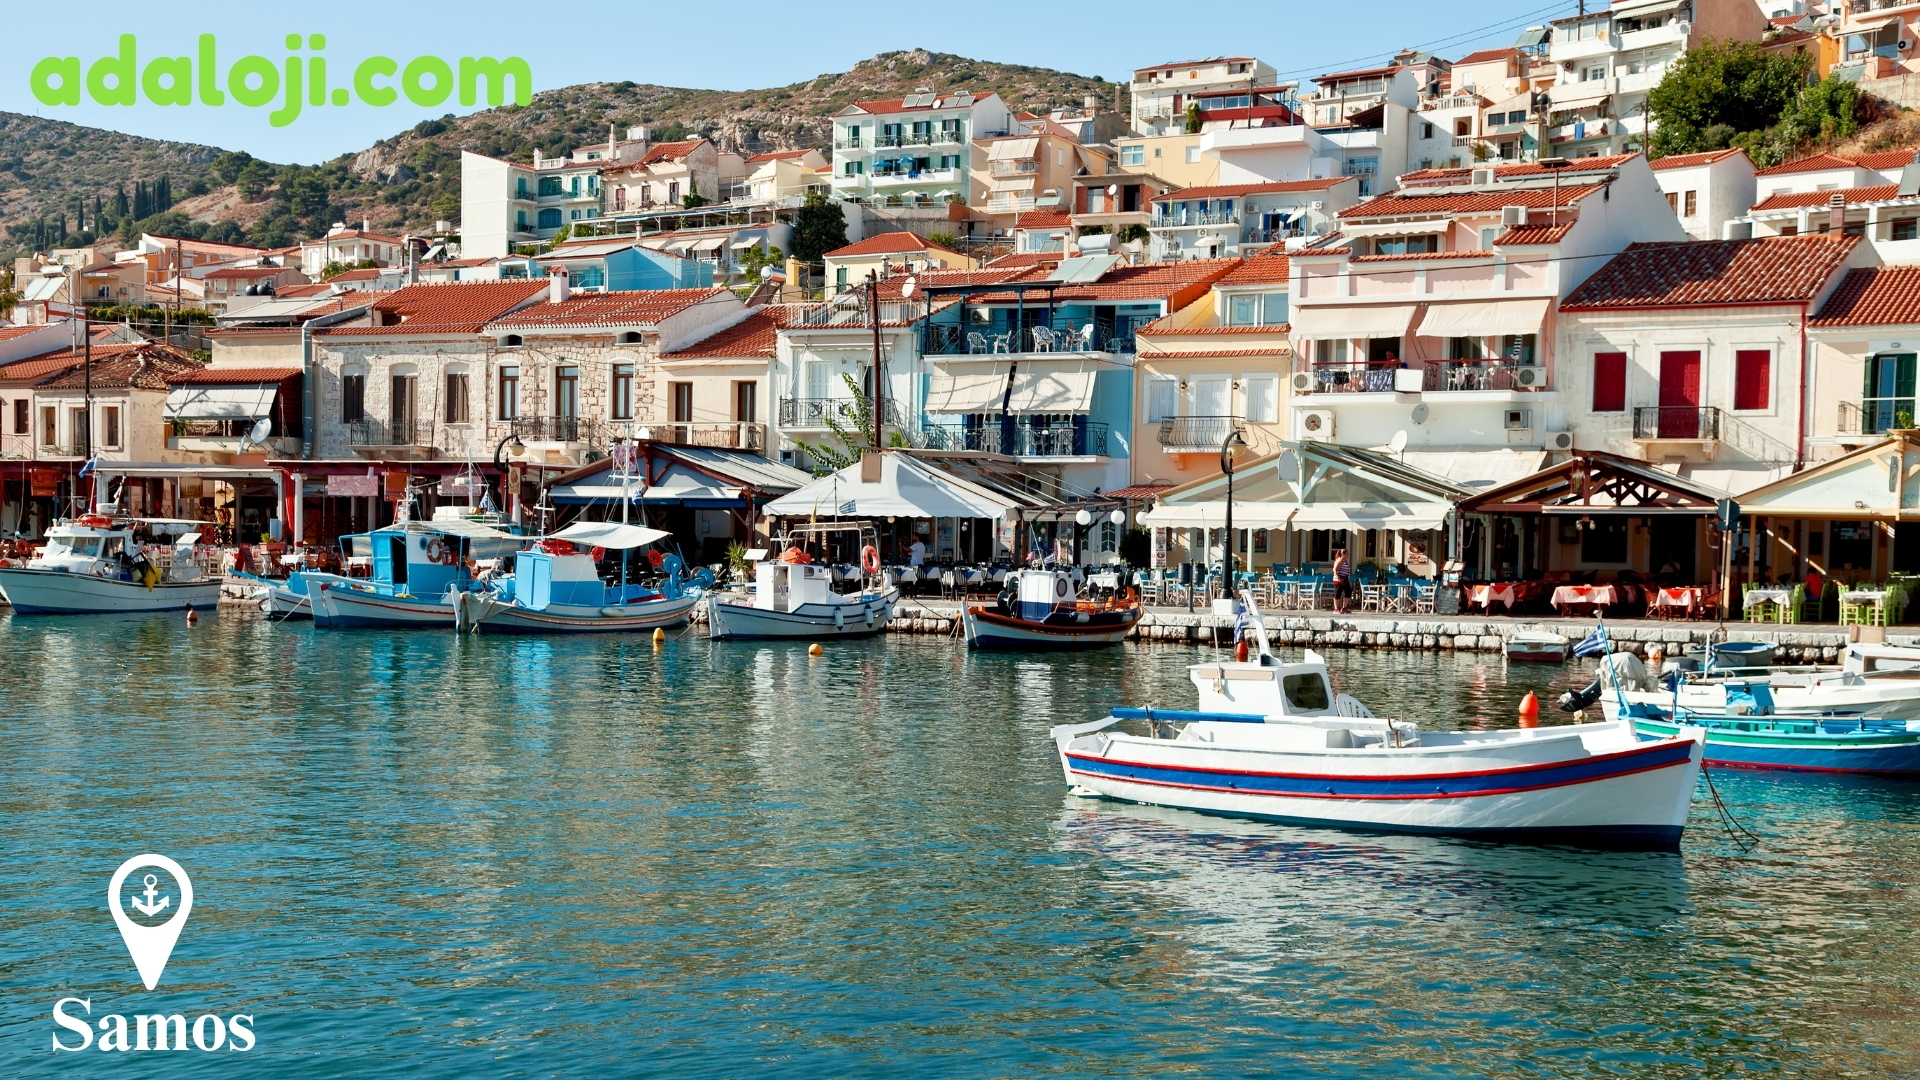 Samos - Your Gateway to the Aegean Sea.